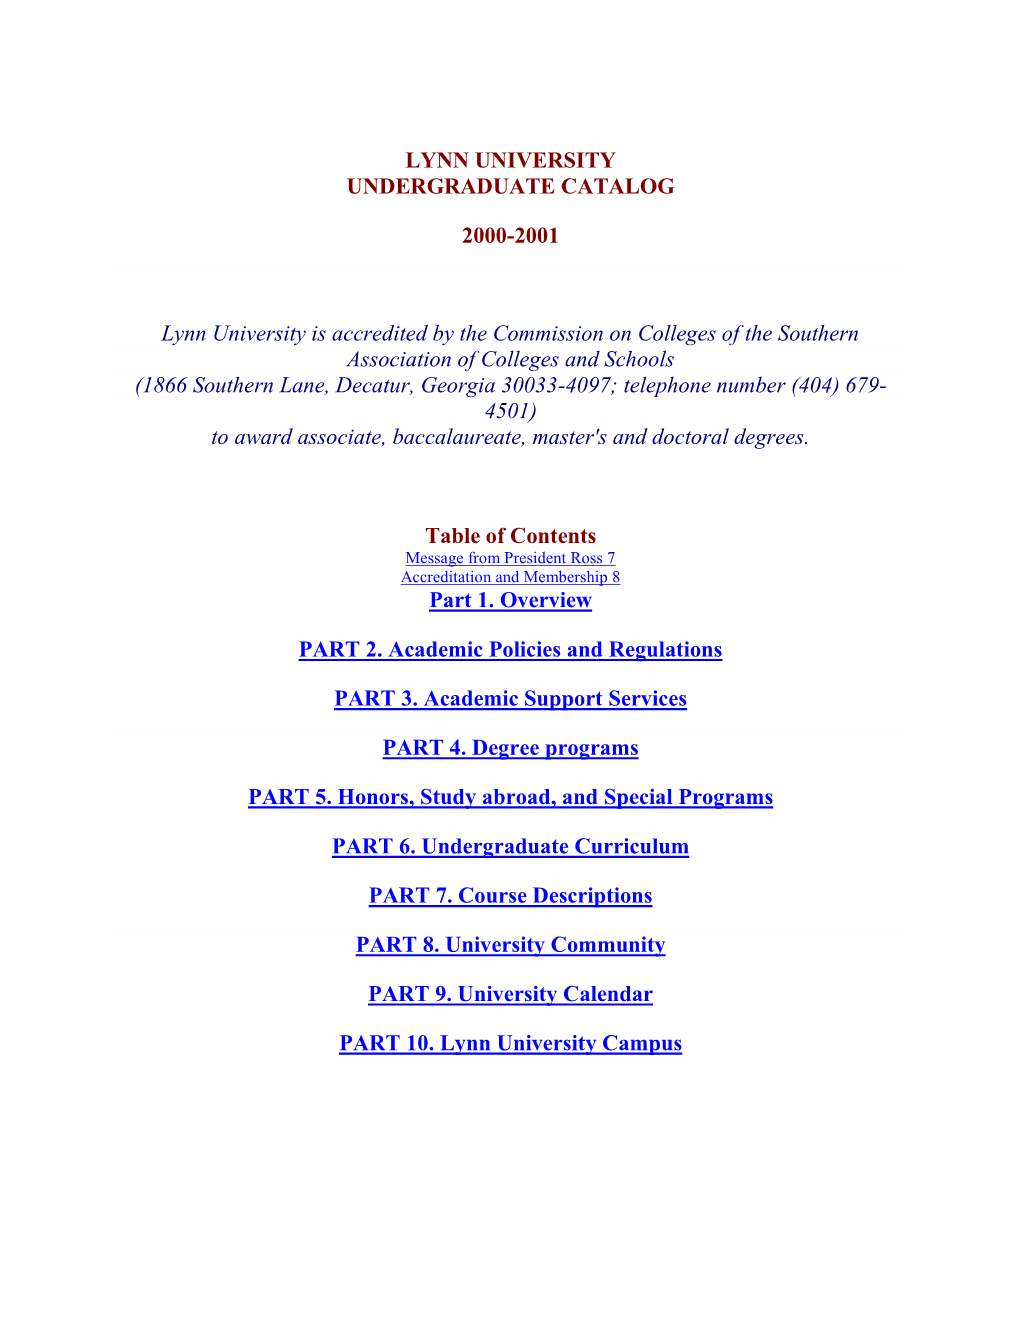 2000-2001 Lynn University Undergraduate Catalog